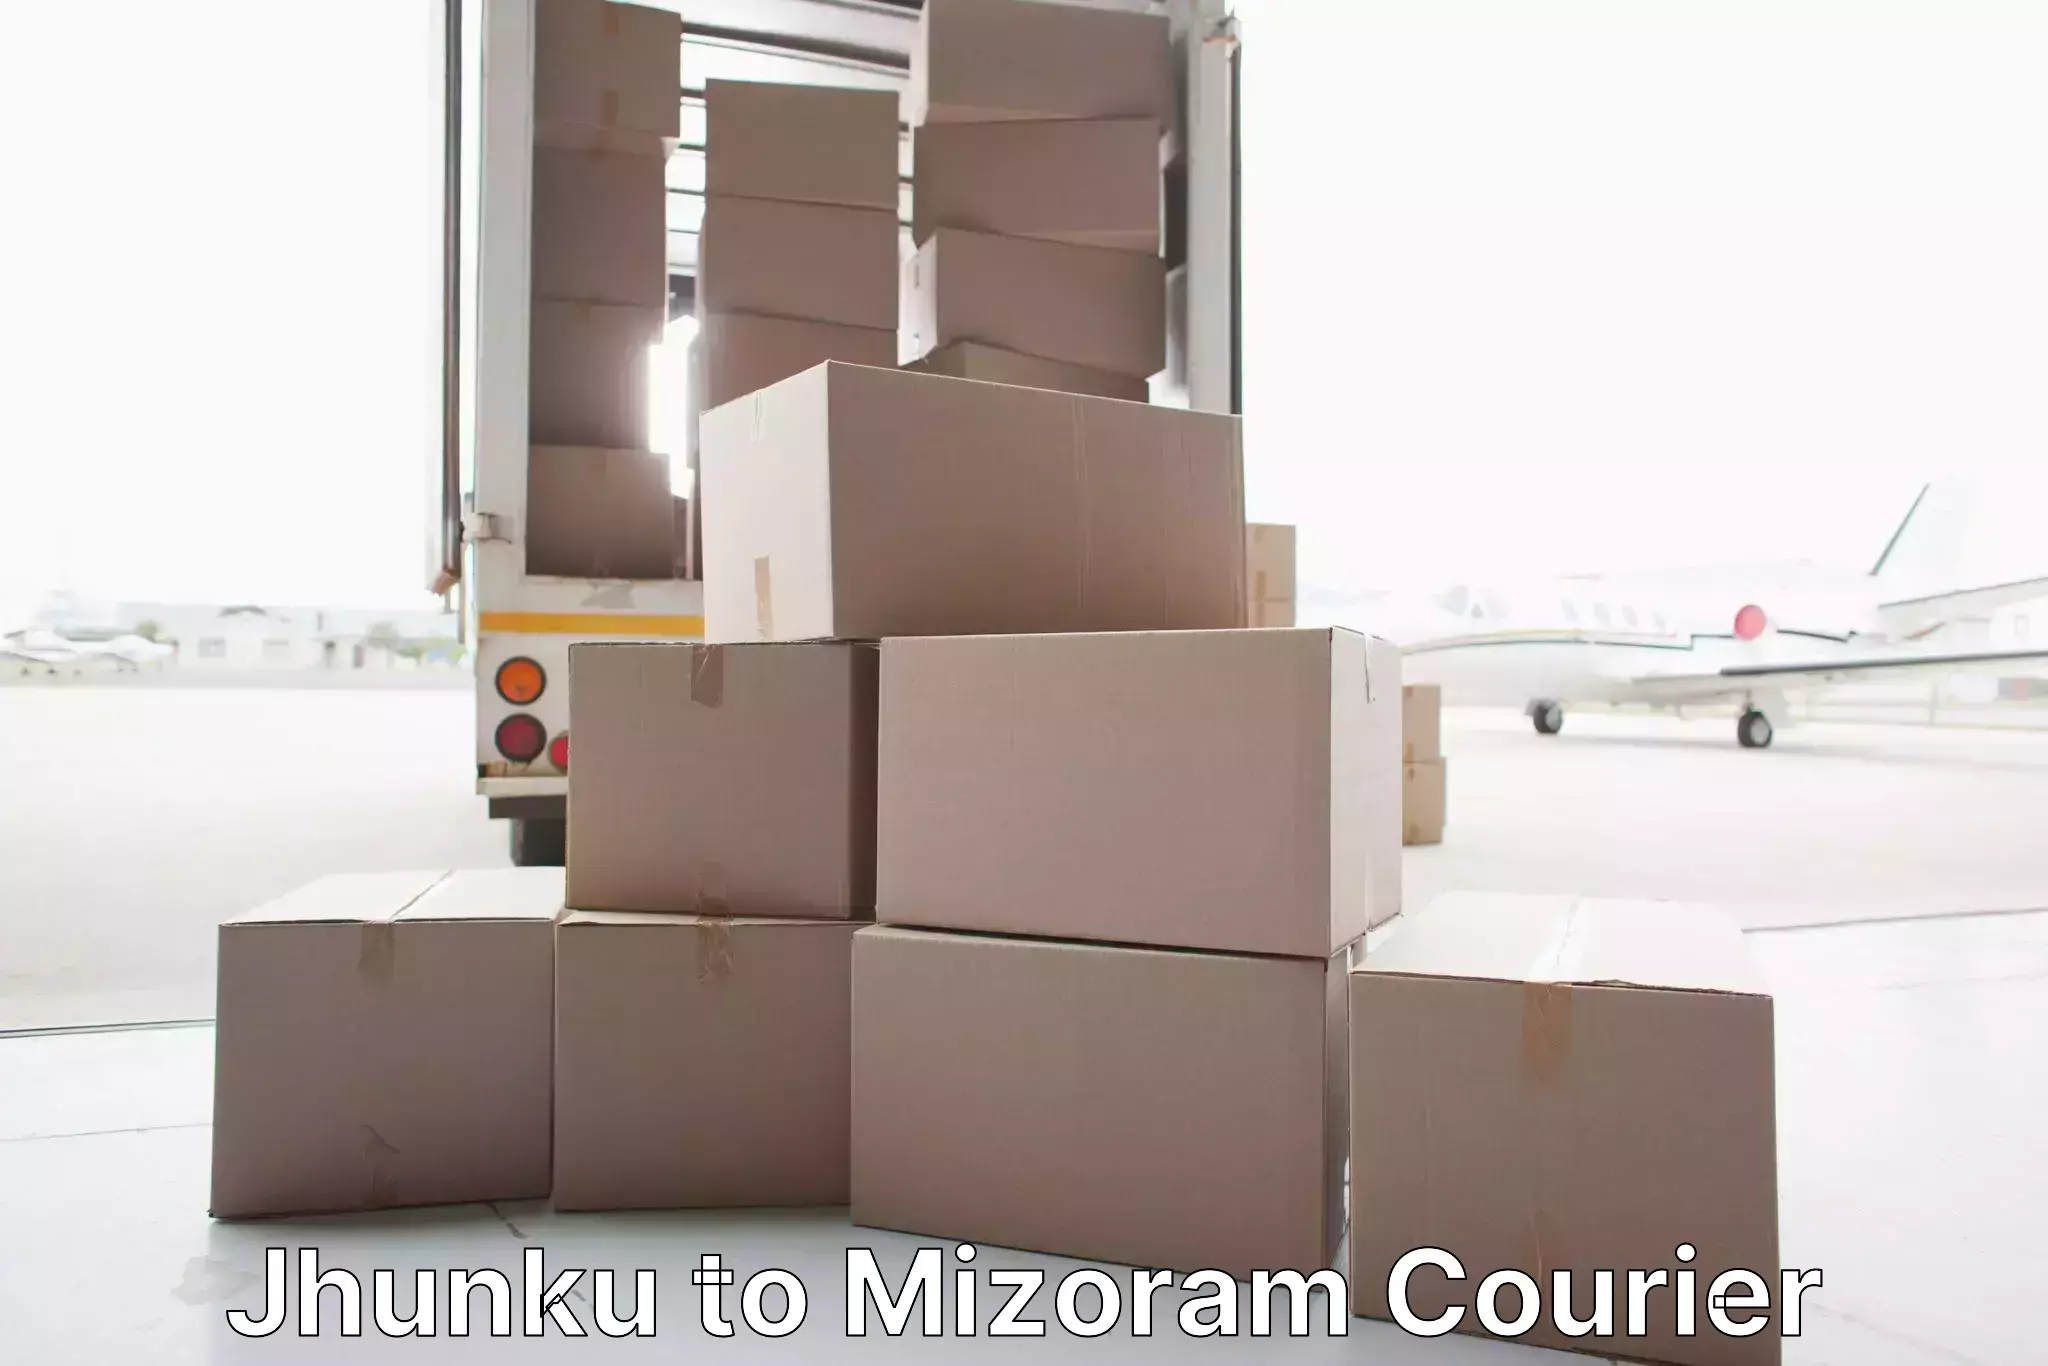 Trusted moving company Jhunku to Mizoram